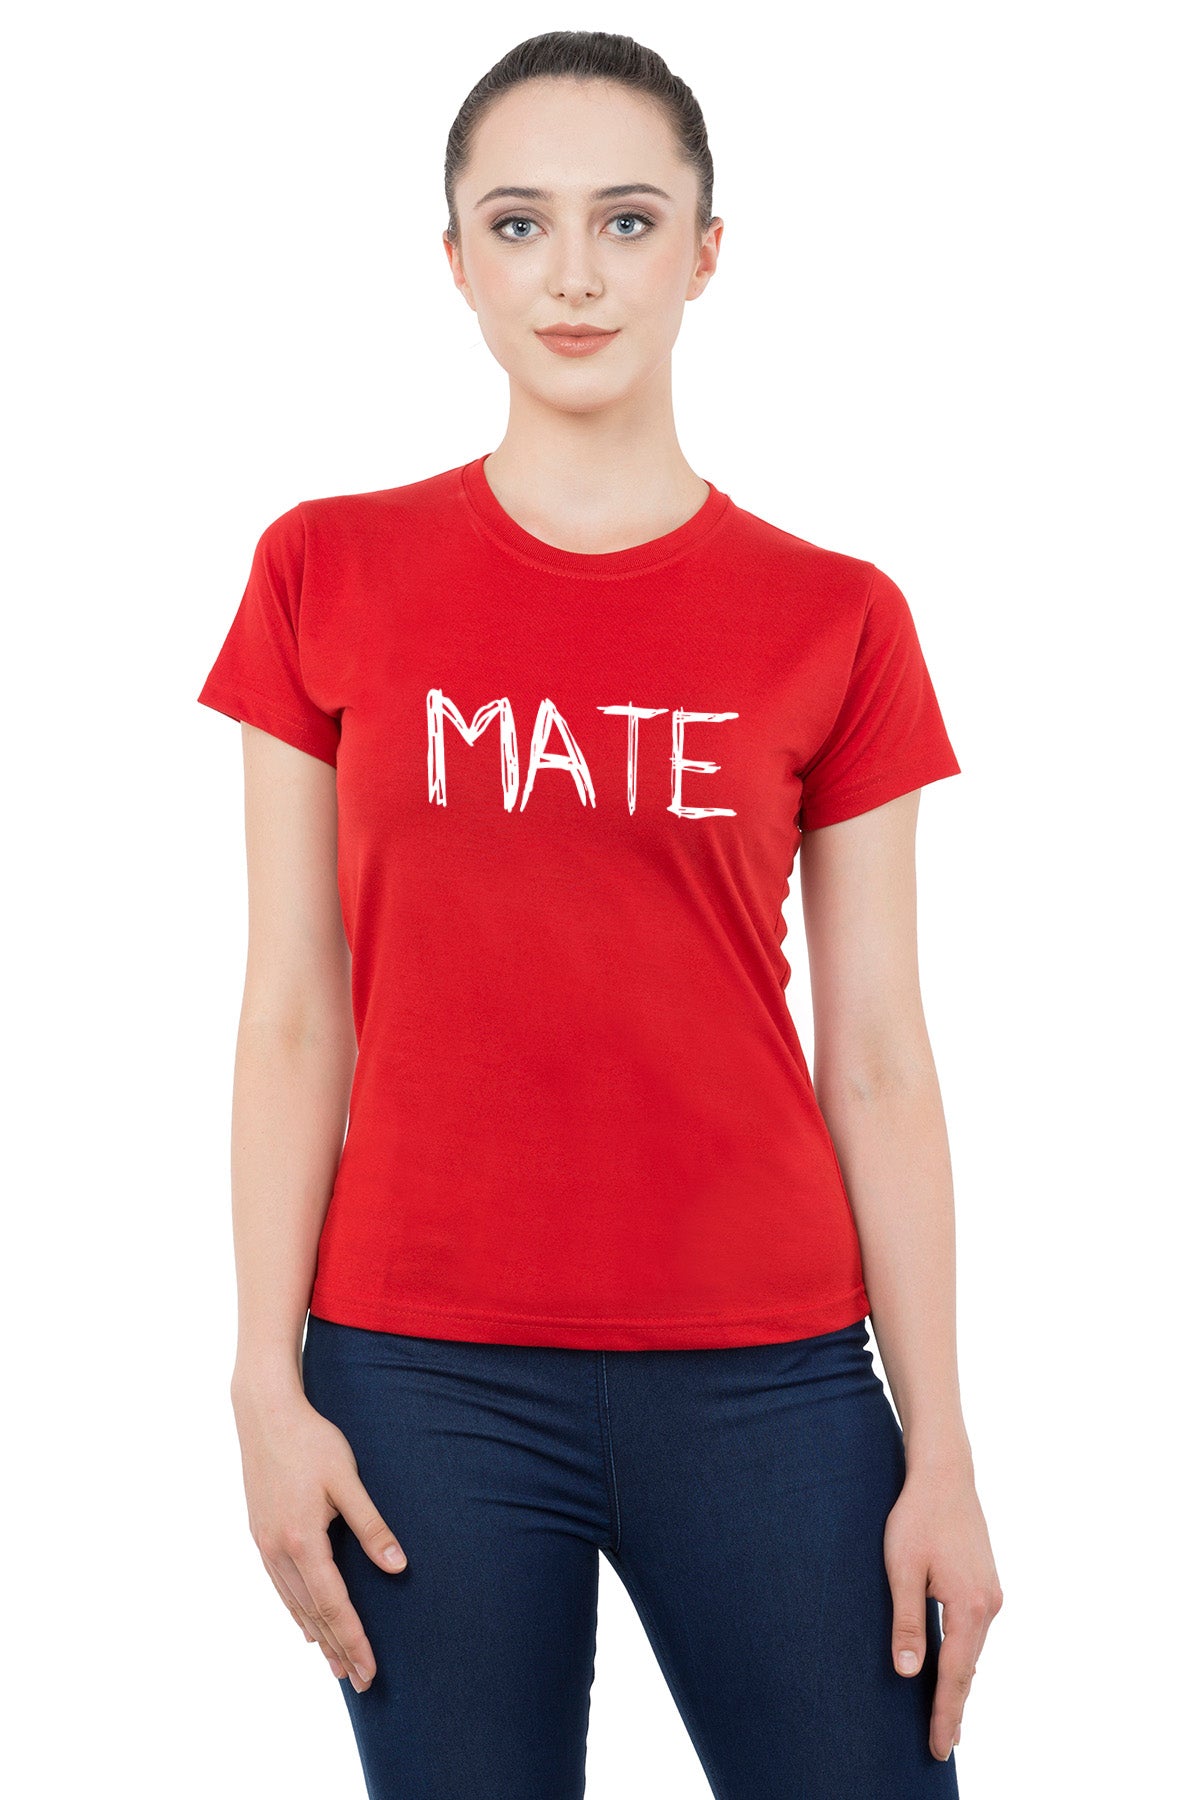 Soul Mate matching Couple T shirts- Red